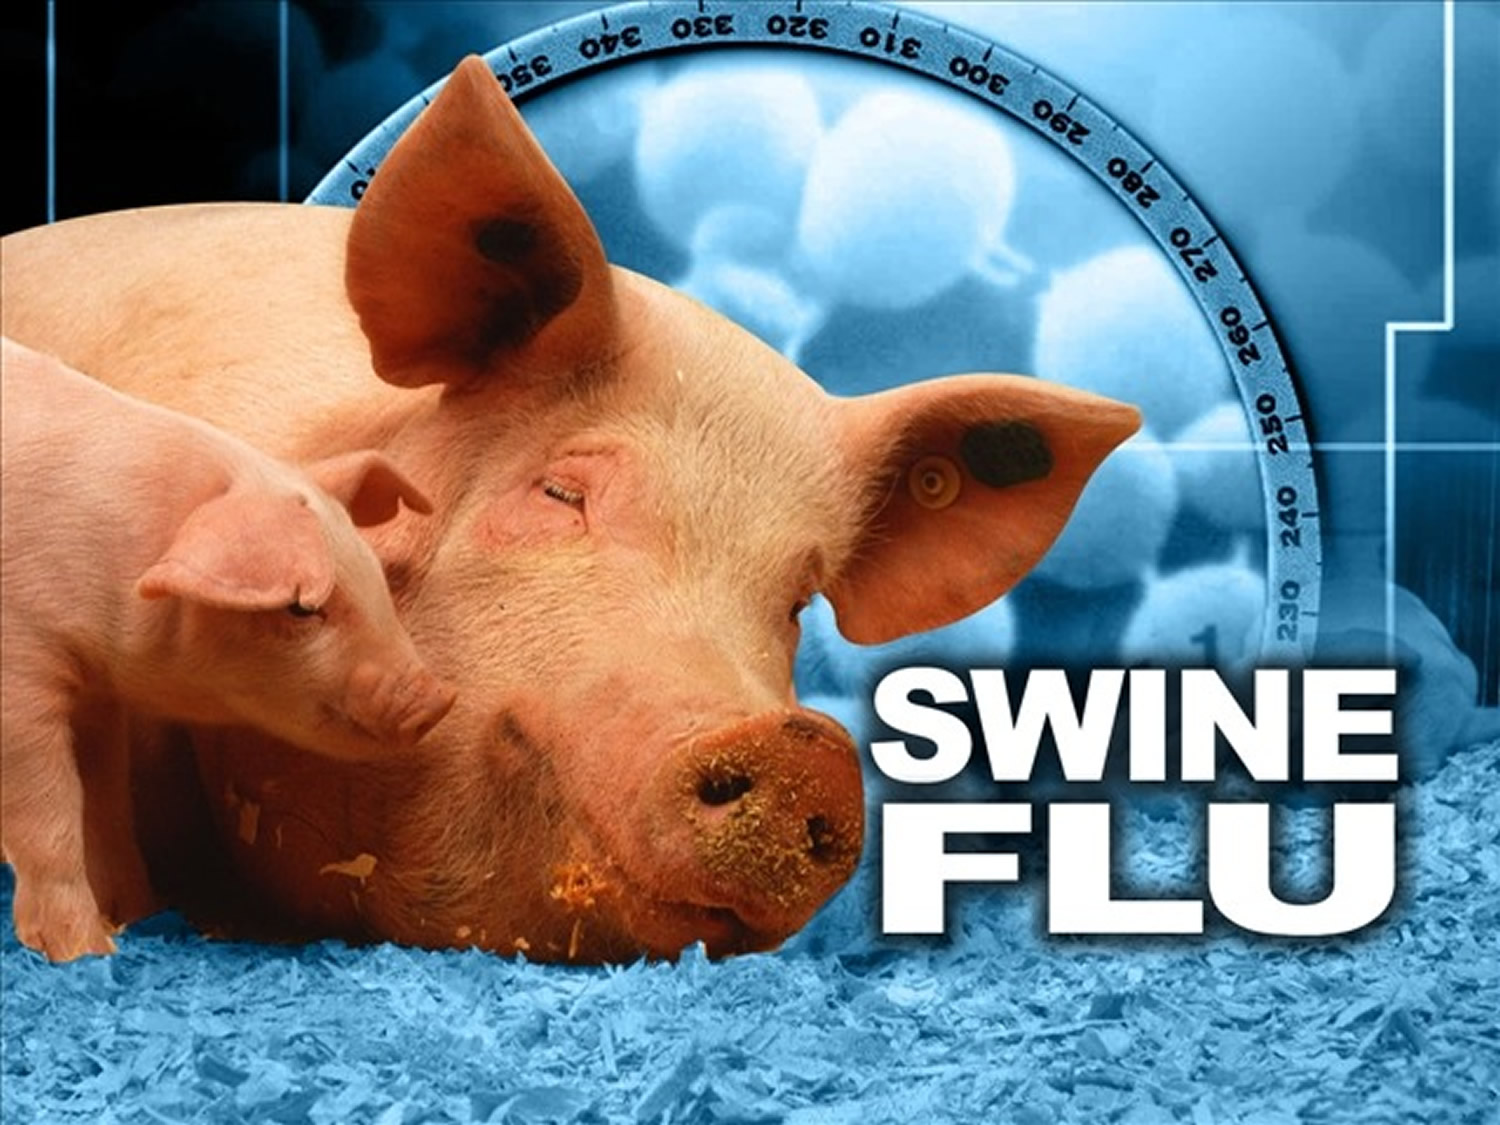 Swine Flu - H1N1 Virus - Symptoms, Vaccine, Treatment